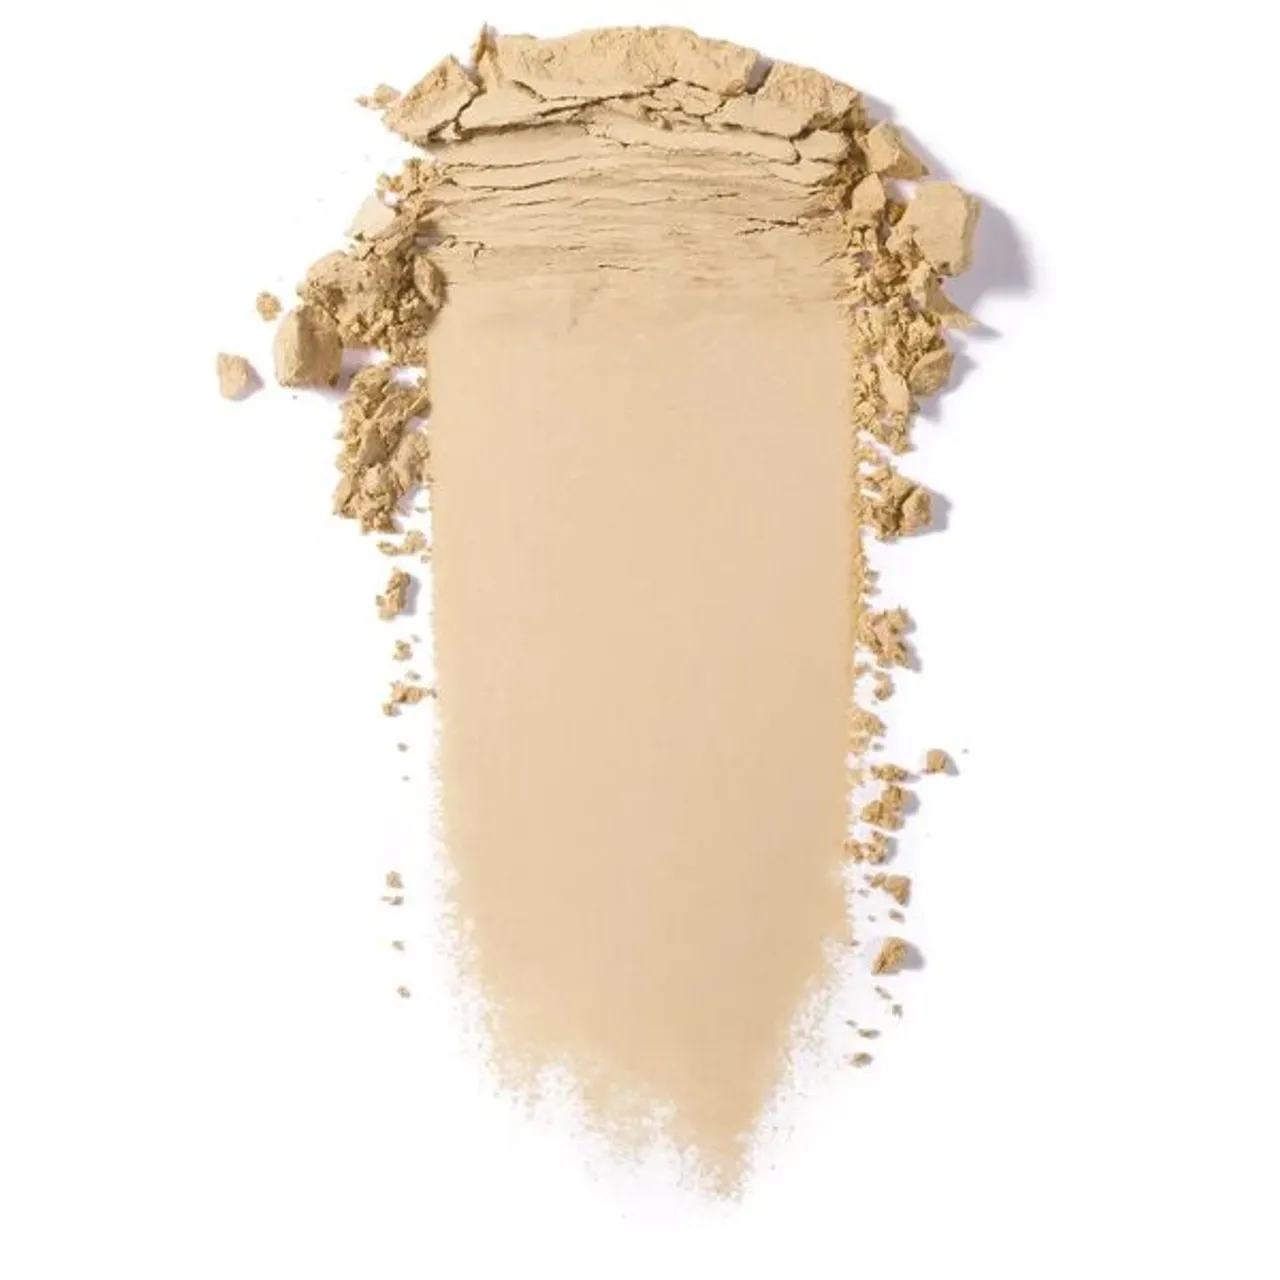 Clinique Almost Powder Makeup SPF 15 Powder Foundation - All Skin Types, 10g - Light - Unisex